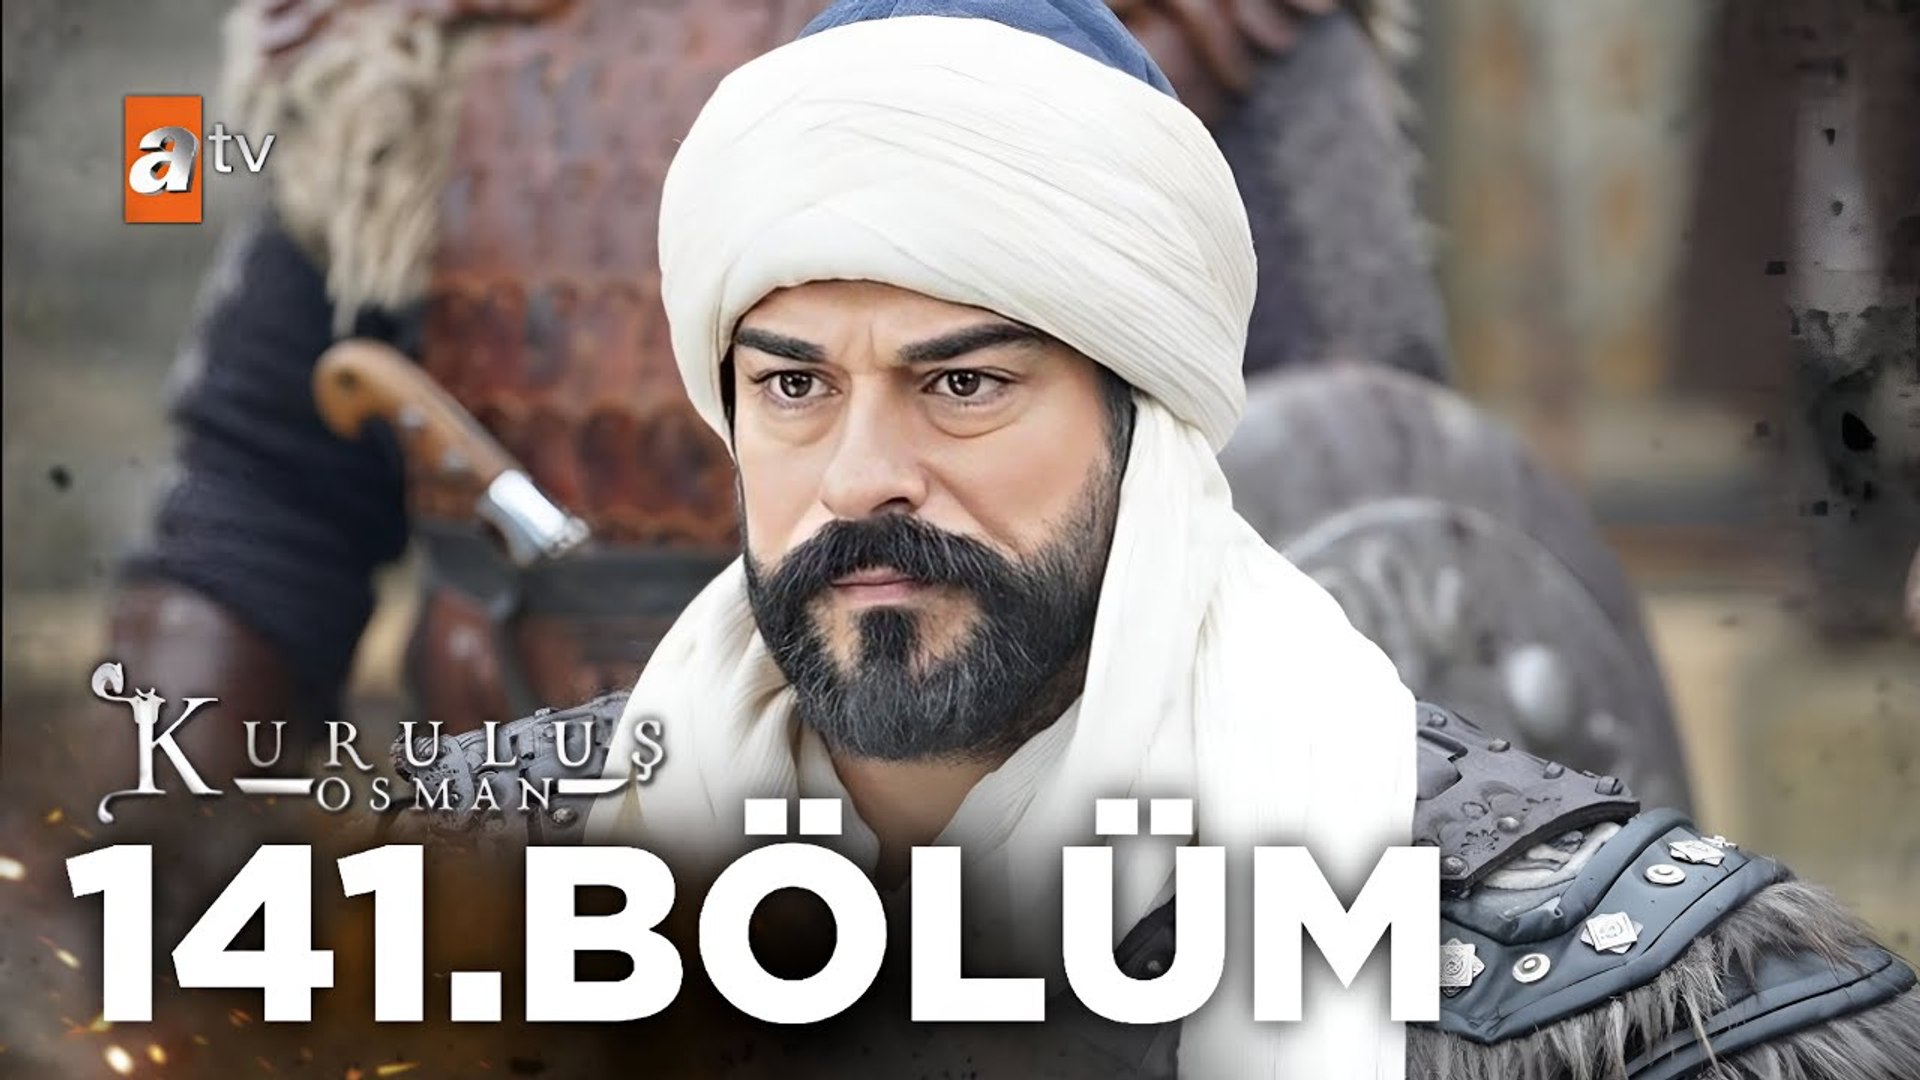 Kurulus osman season 5 episode 141